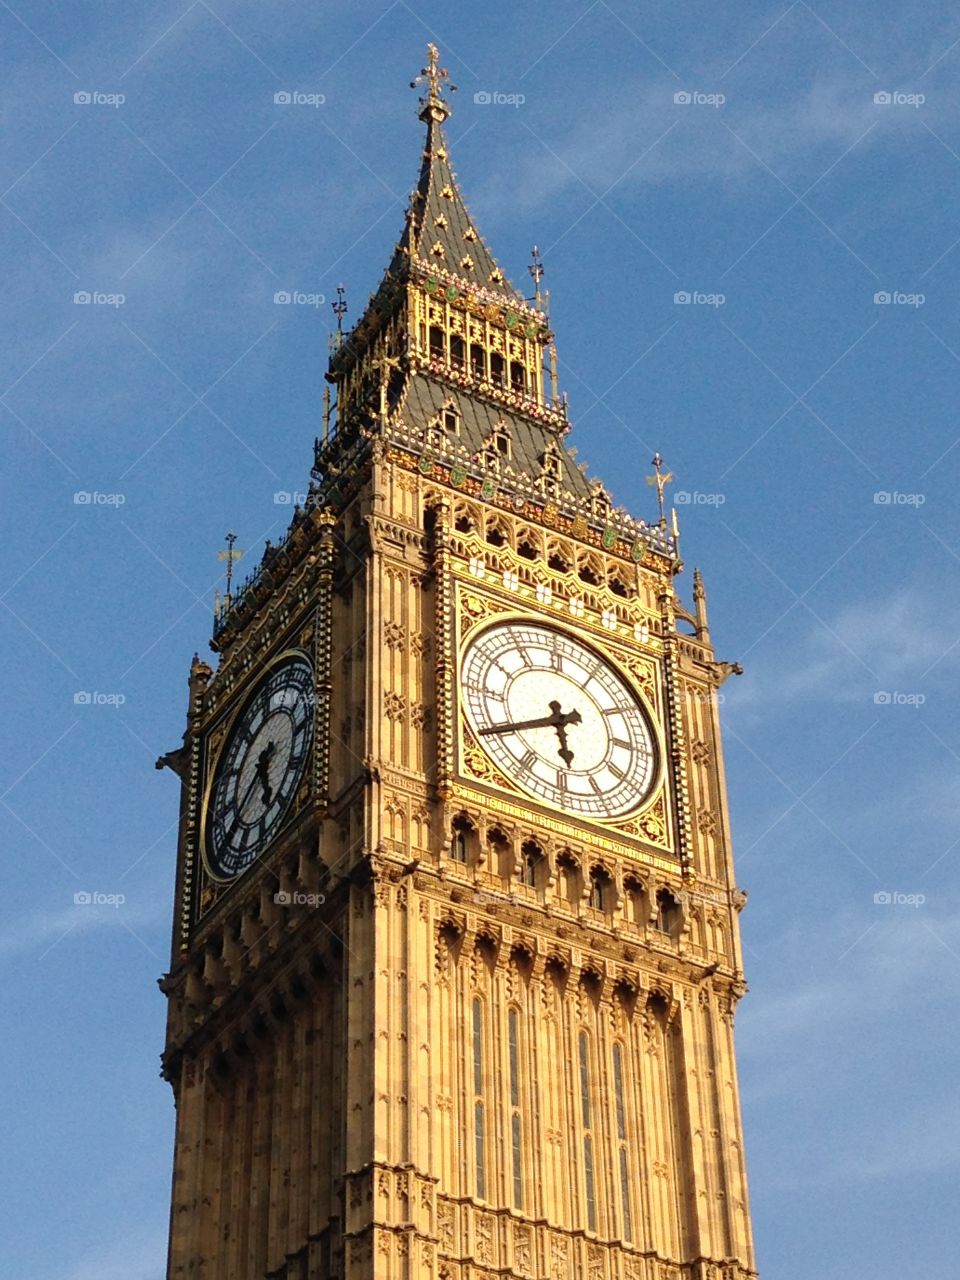 Big Ben clock tower at Westminster Houses of Parliament London England UK 